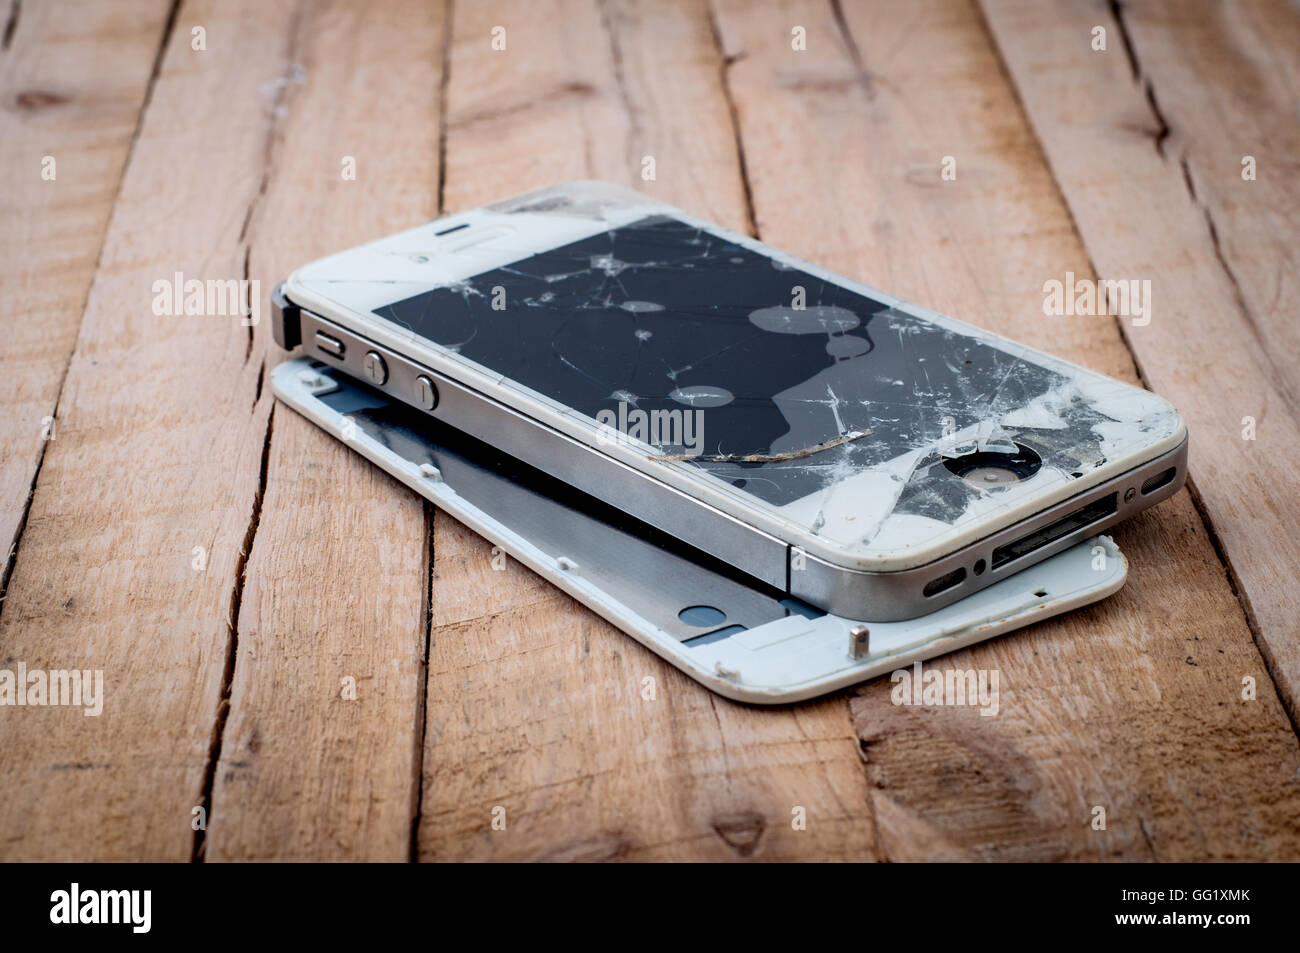 Broken iPhone 4s on wooden table Stock Photo